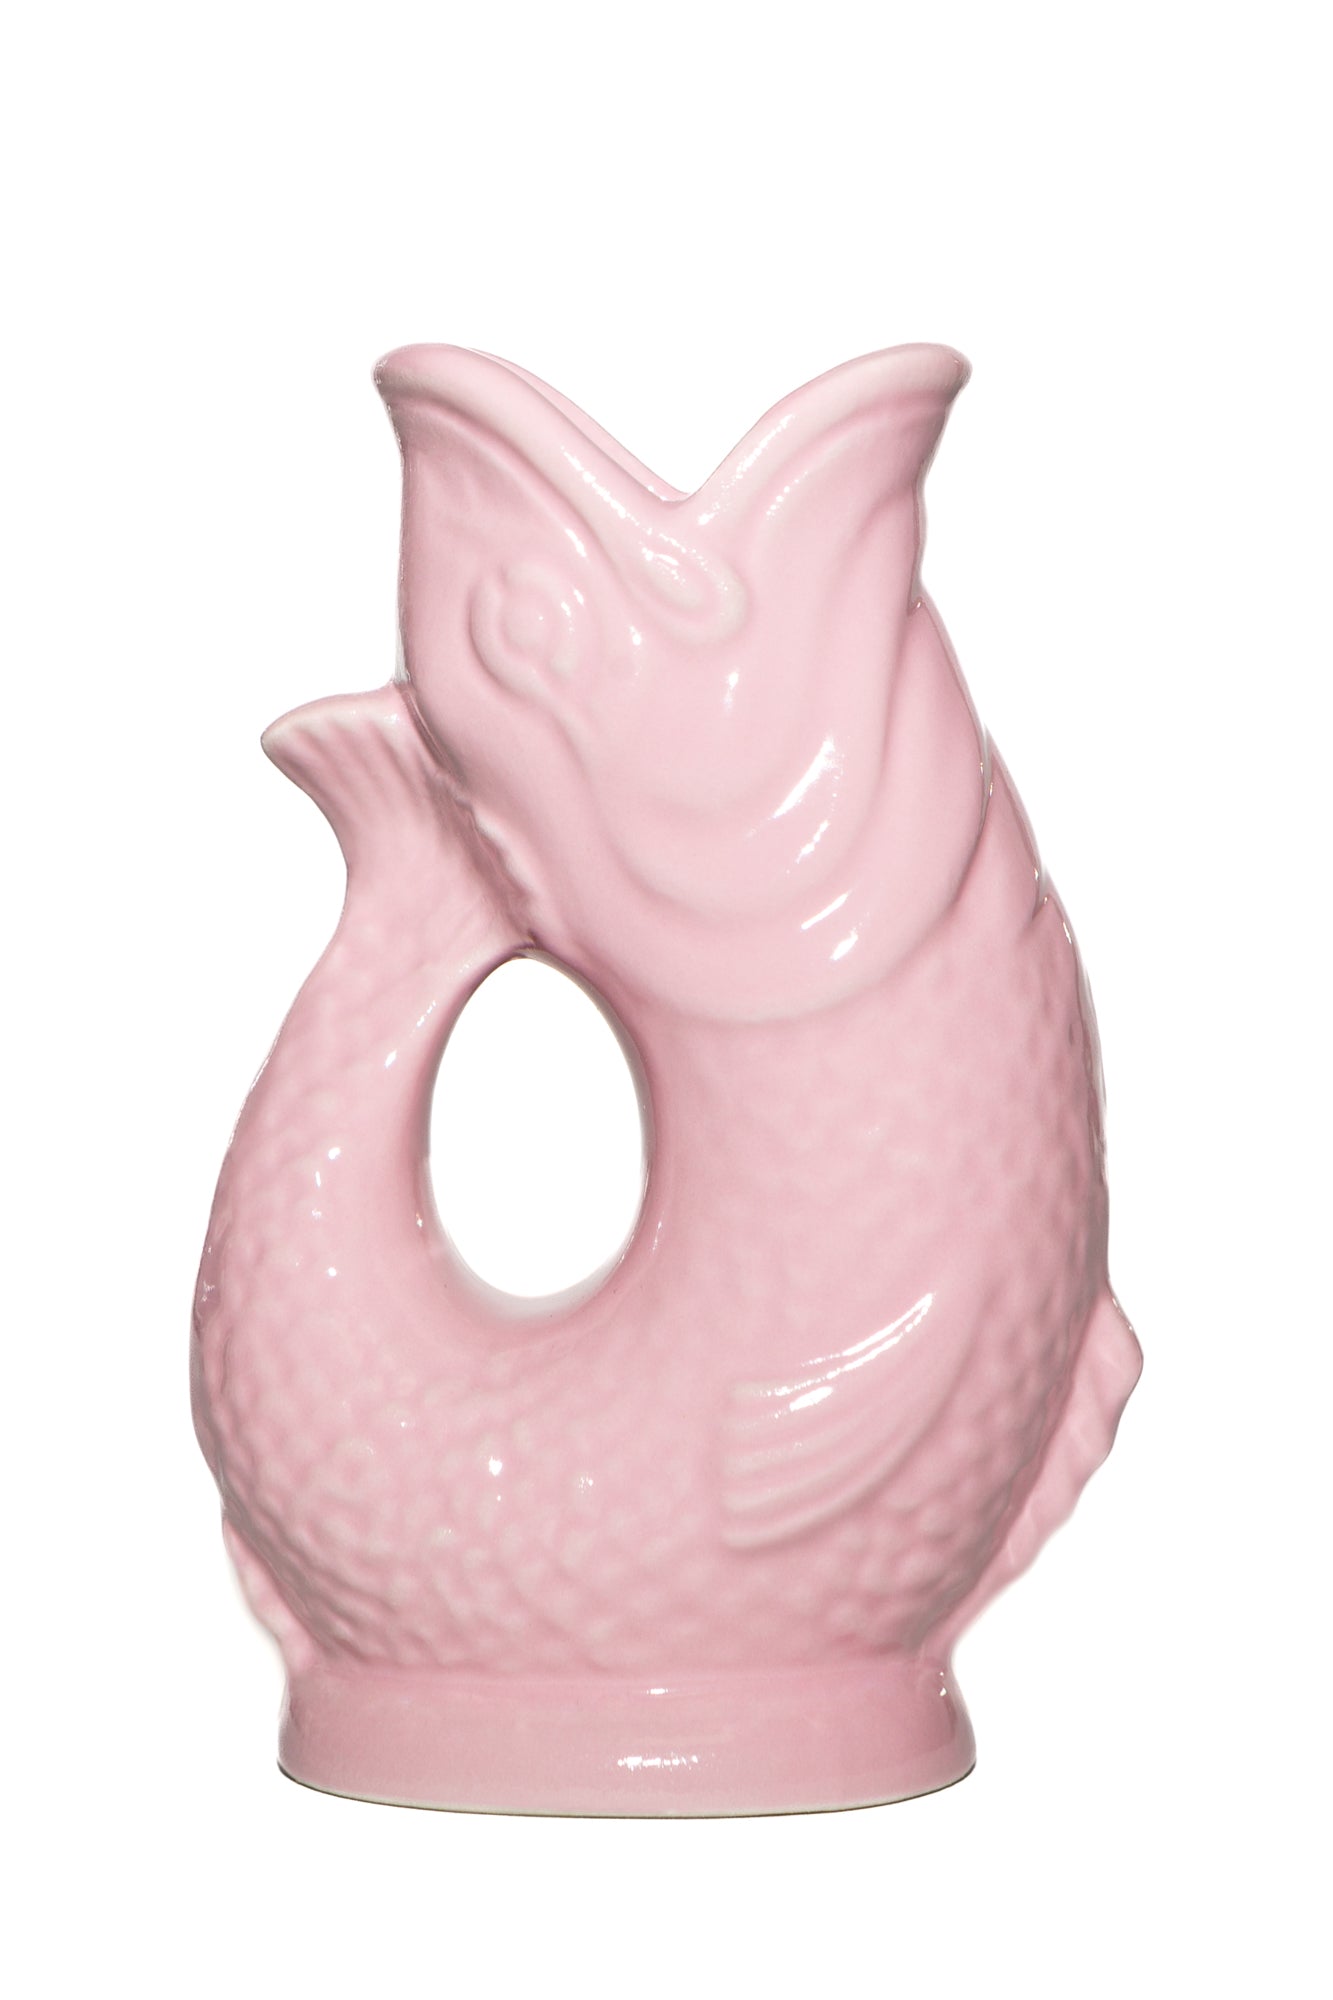 Baby Pink Original Gluggle Jug Pitcher Vase Jar ex Wade